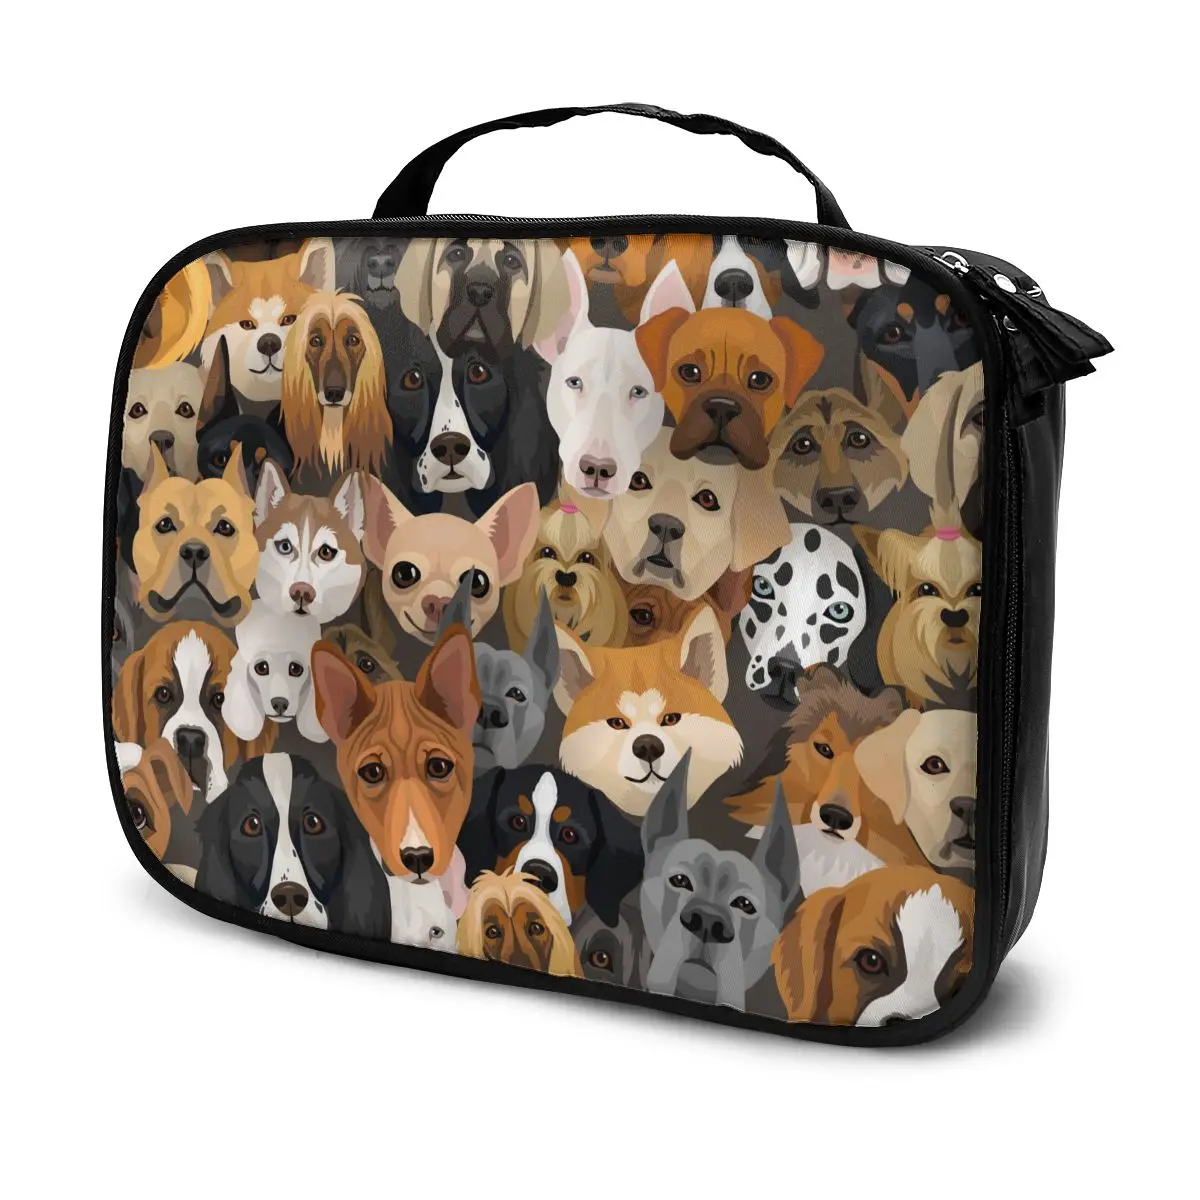 

Multifunction Cosmetic Bag Dogs Different Breeds Women Makeup Bag Toiletries Grooming Kit Travel Insert Organizer Case Handbag